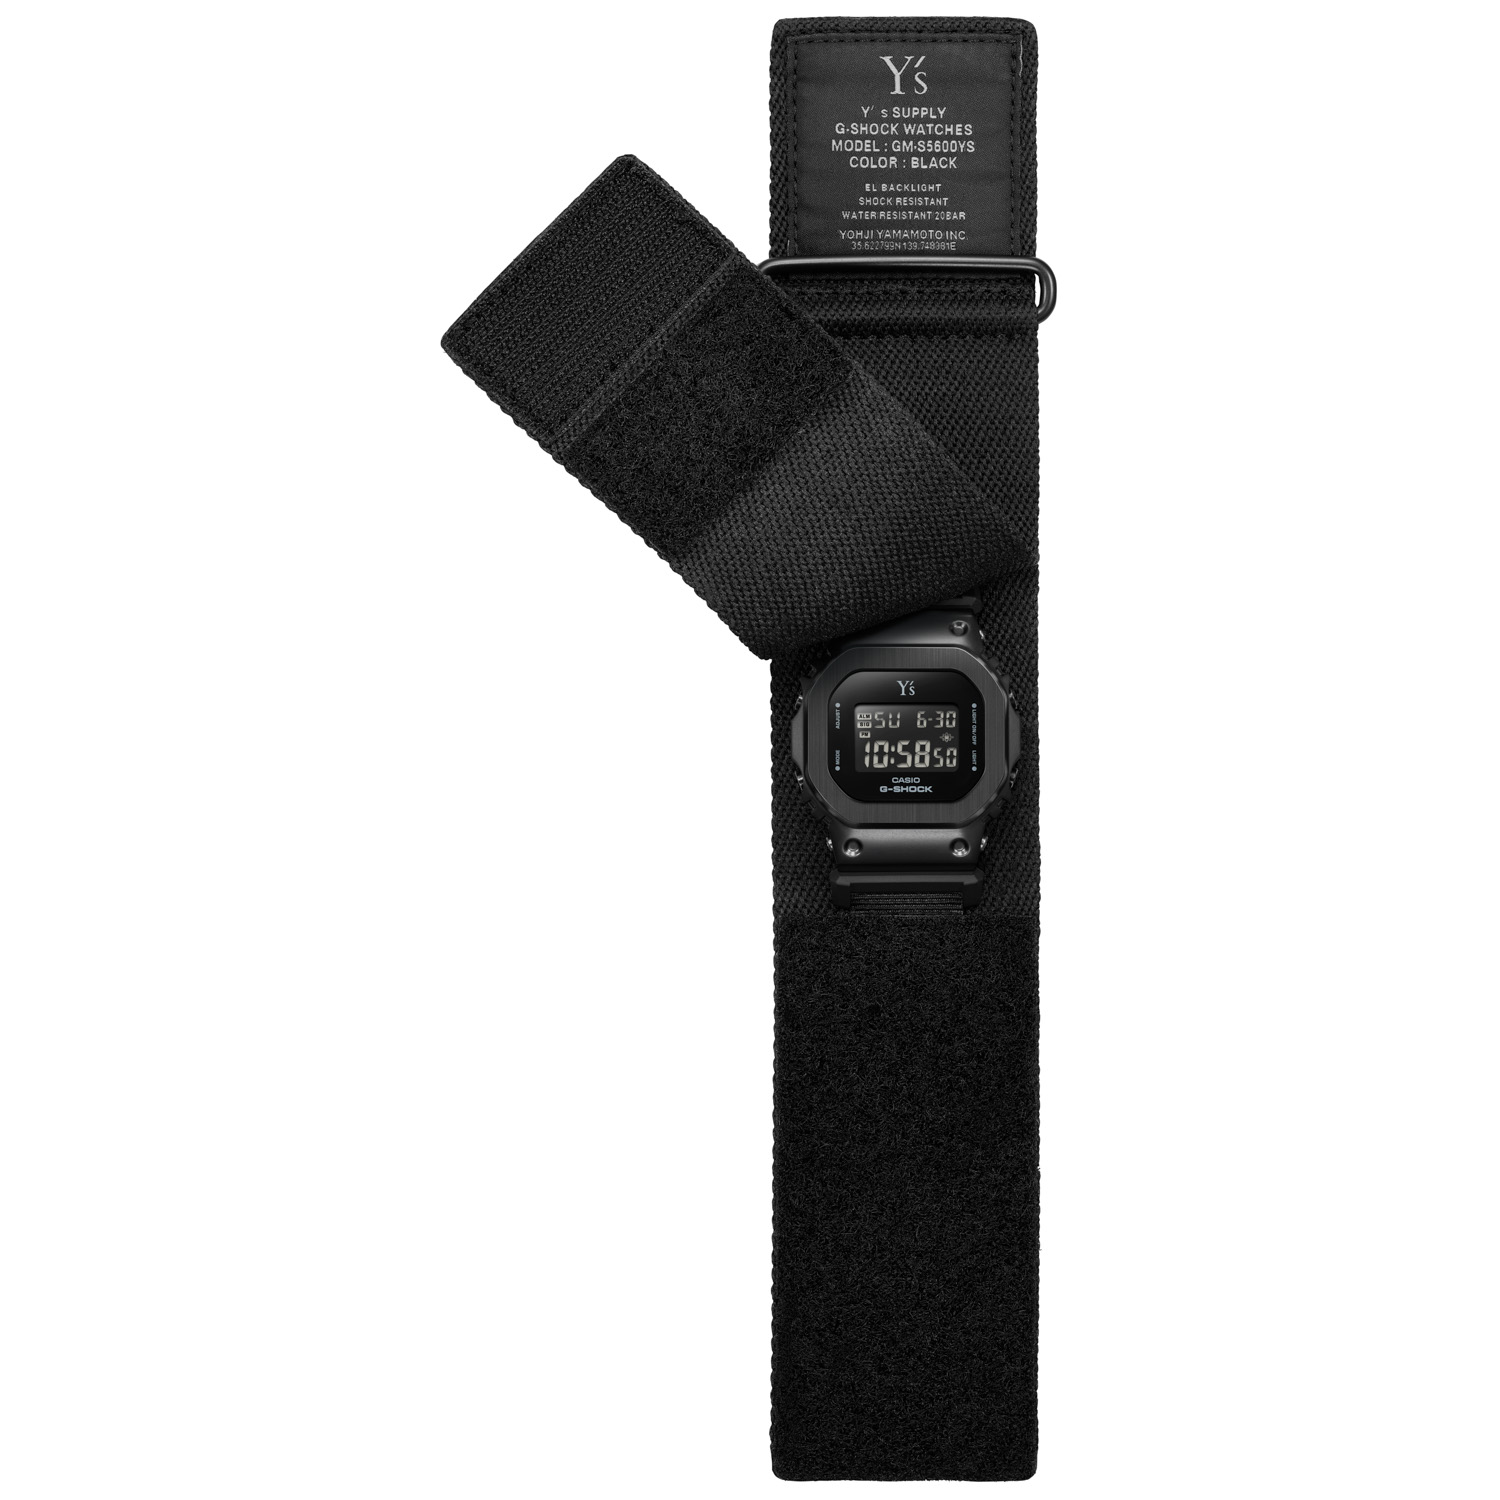 Yohji Yamamoto's Y's & G-SHOCK Announce GM-S5600YS-1 Watch Collab